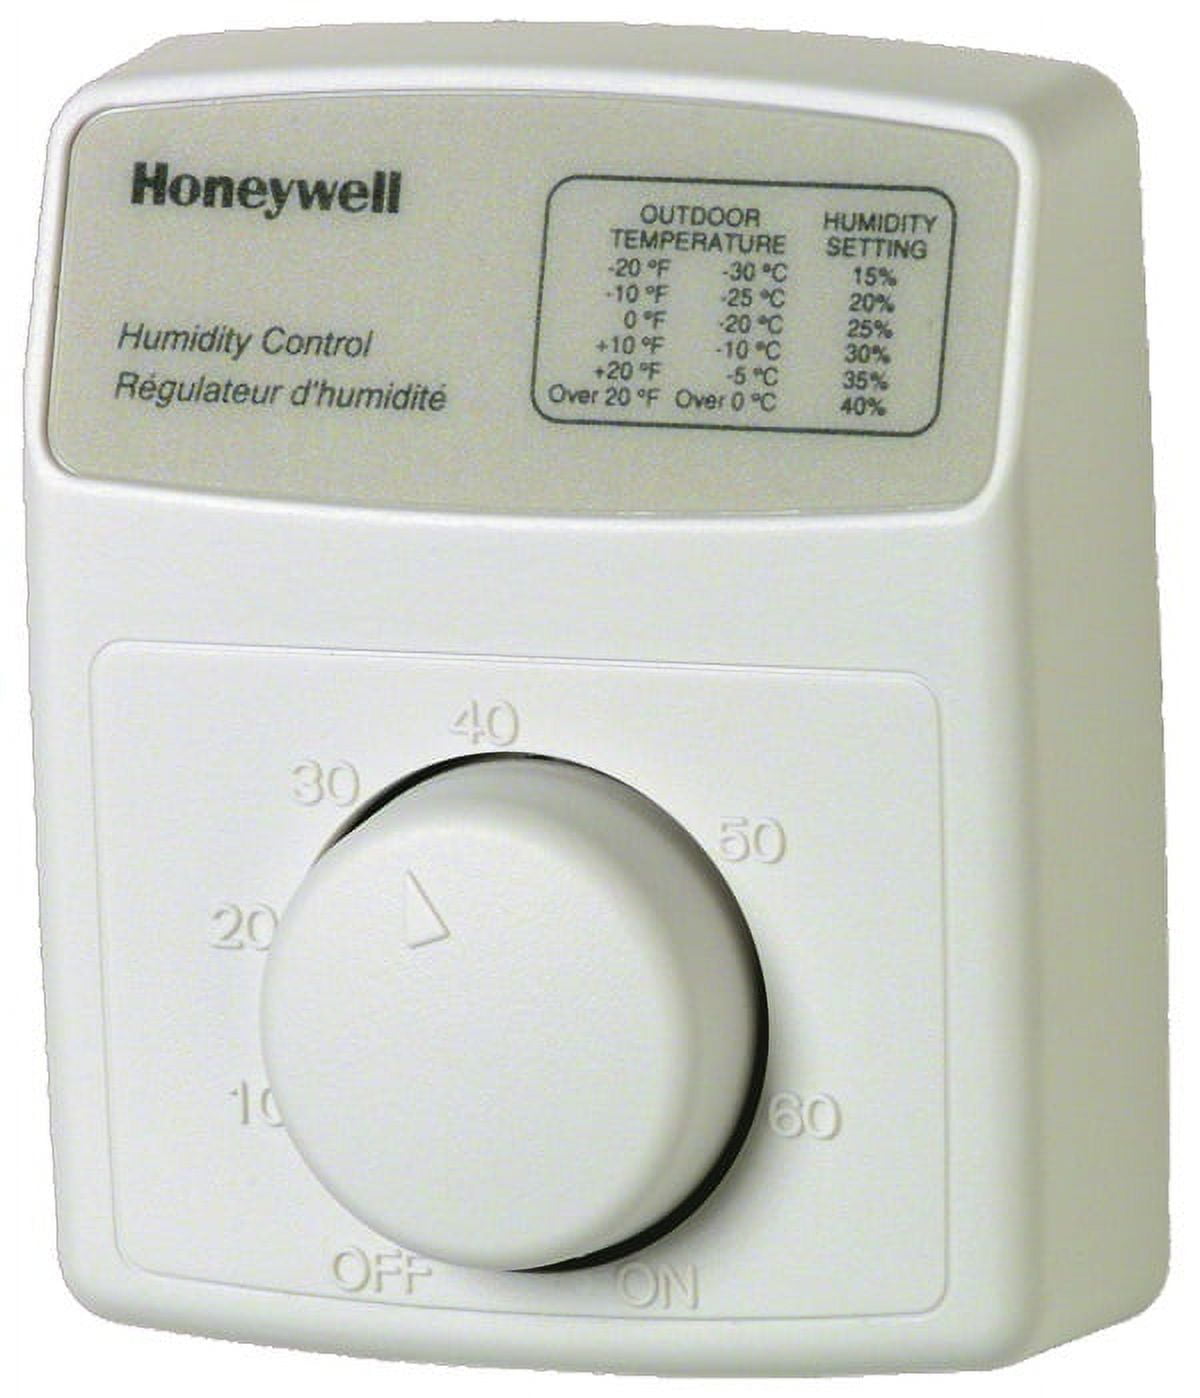 Honeywell Whole House Humidistat H8908B